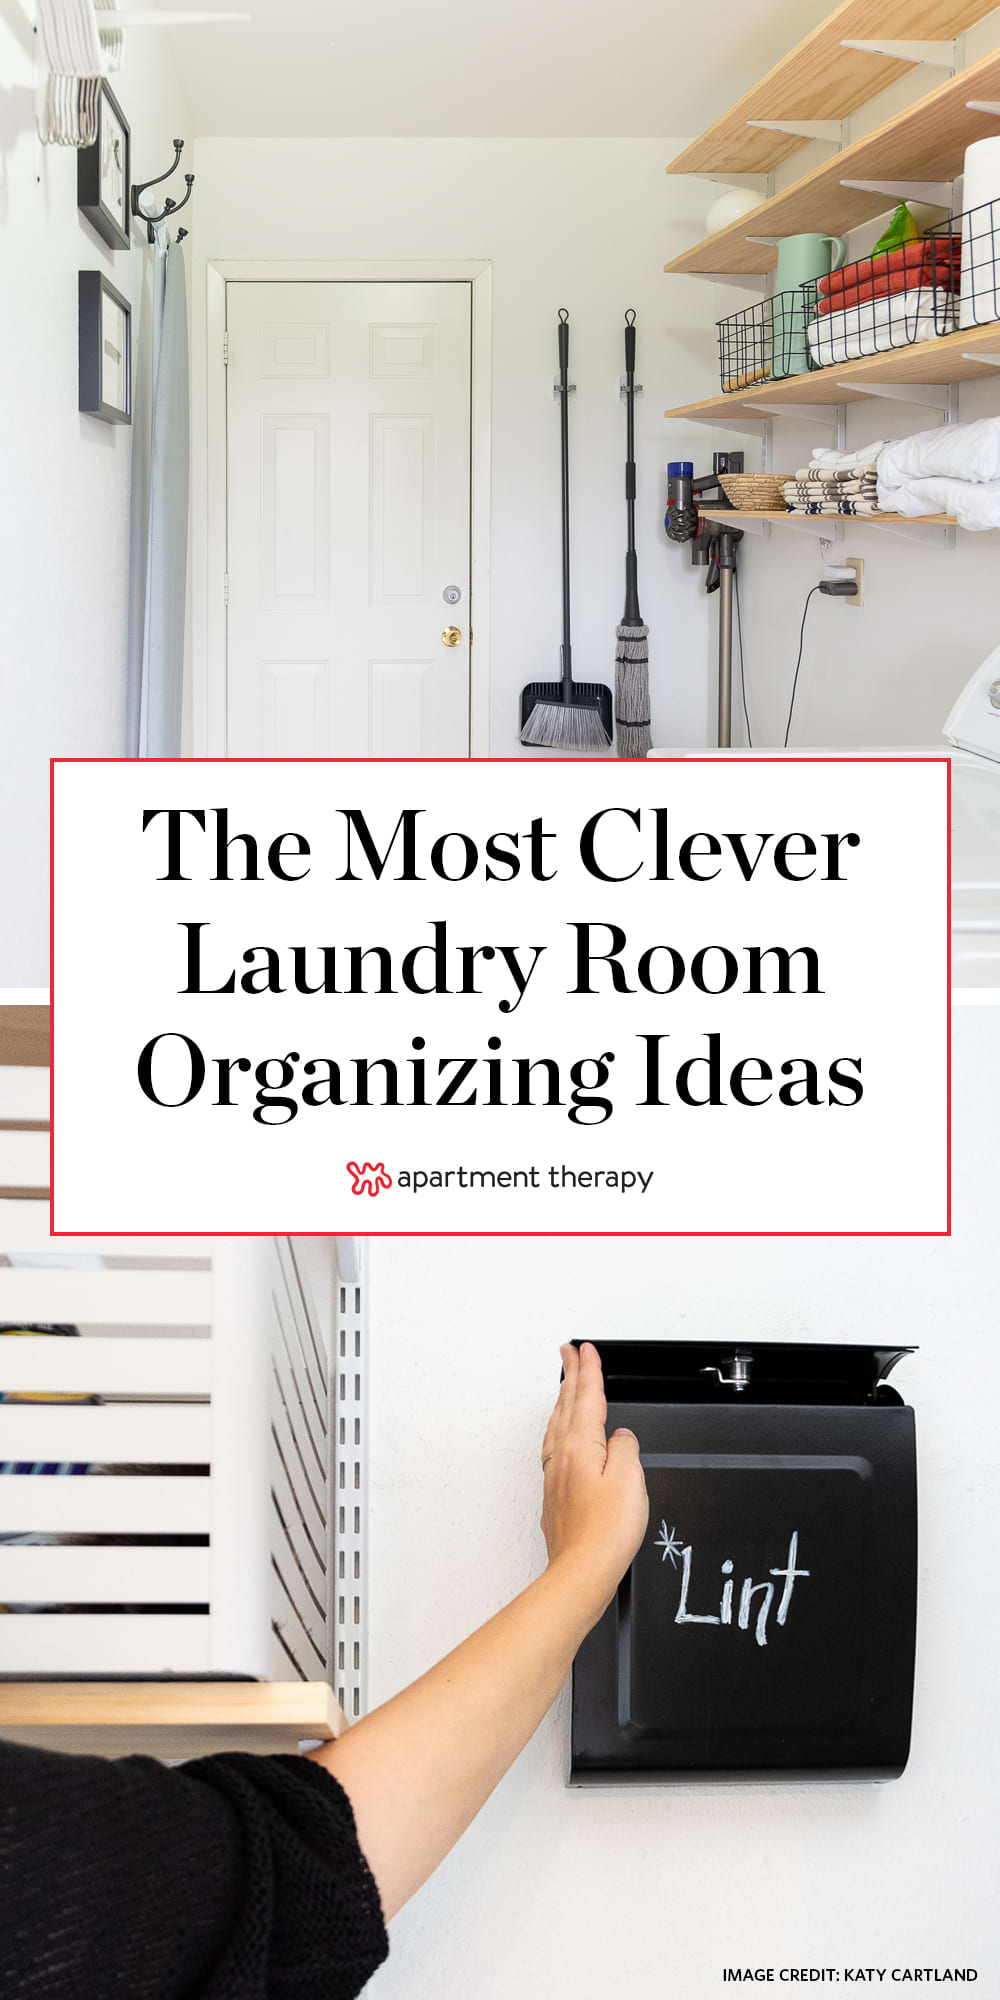 https://cdn.apartmenttherapy.info/image/upload/v1580484423/at/art/photo/2020-01/Laundry%20Room%20Hacks/laundry-room-organizing-ideas.jpg